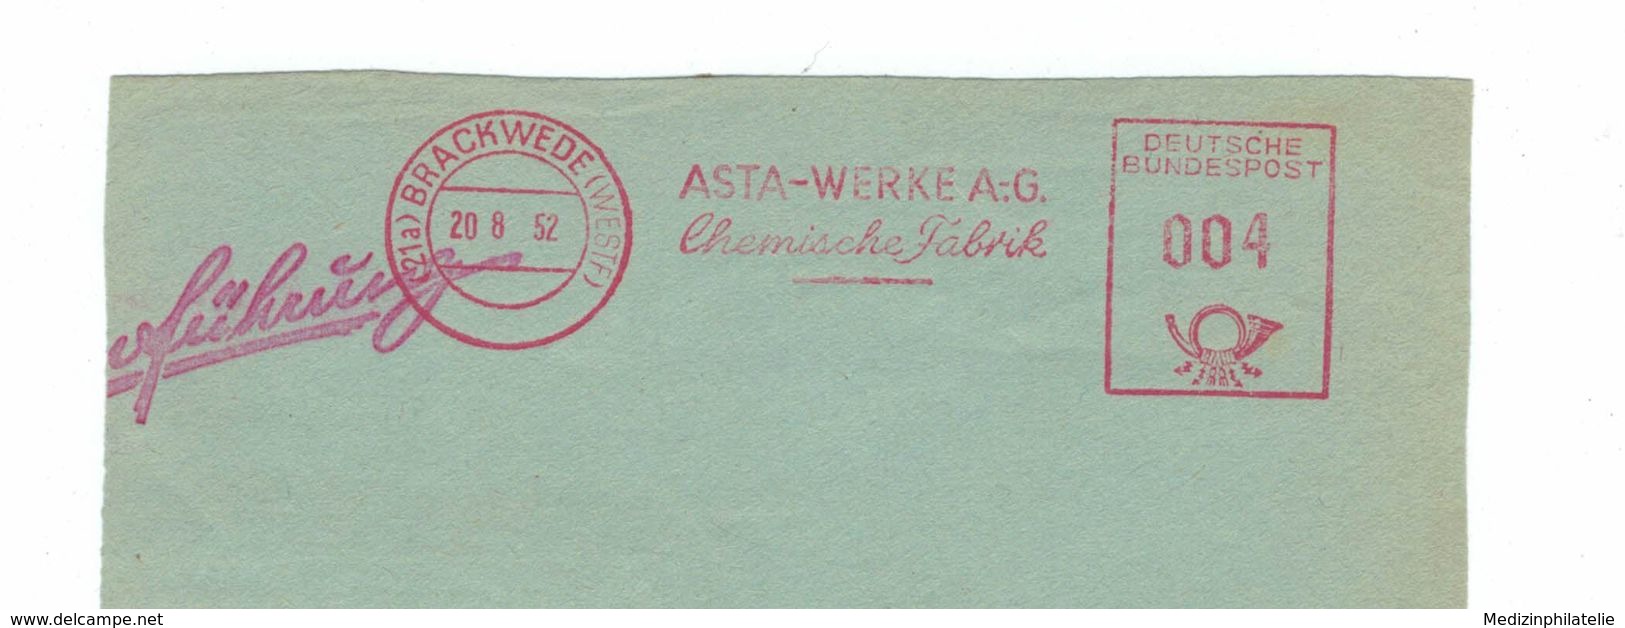 Briefausschnitt AFS - 21a Brackwede Westfalen 1952 - Asta-Werke AG Chemische Fabrik - Pharmacy